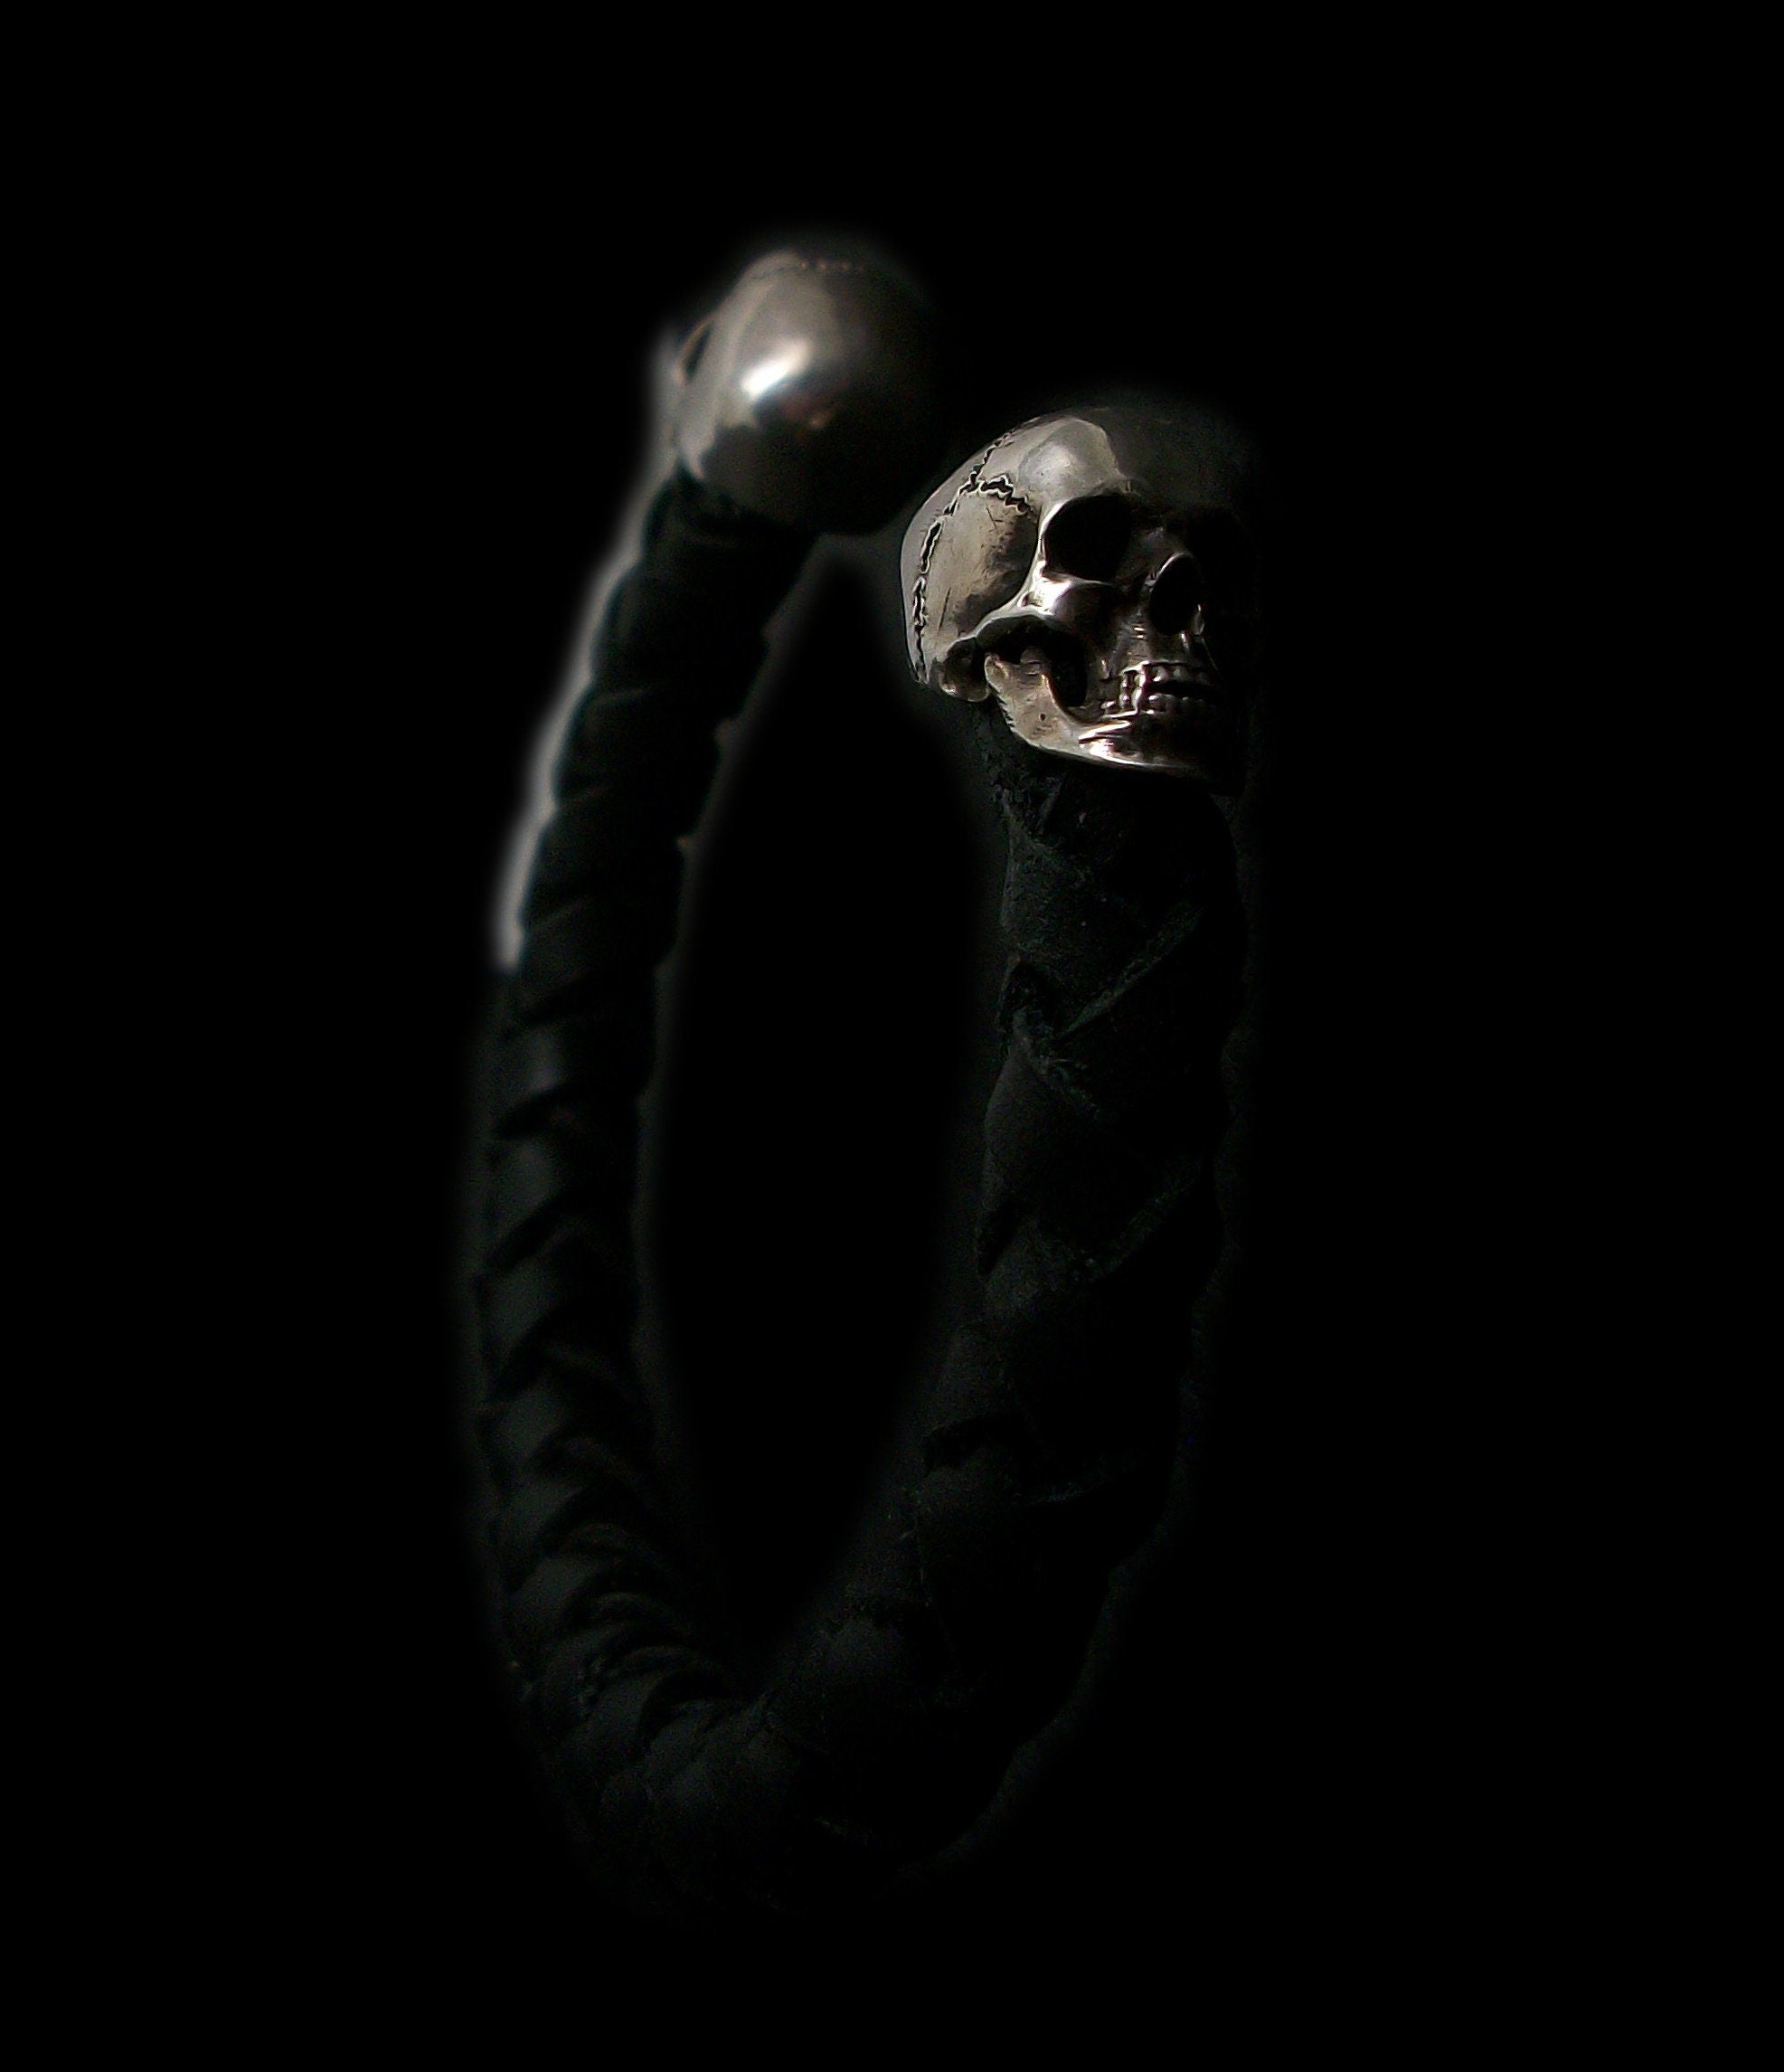 Skull Bracelet - Sterling Silver skulls - Black braided leather  - Open cuff